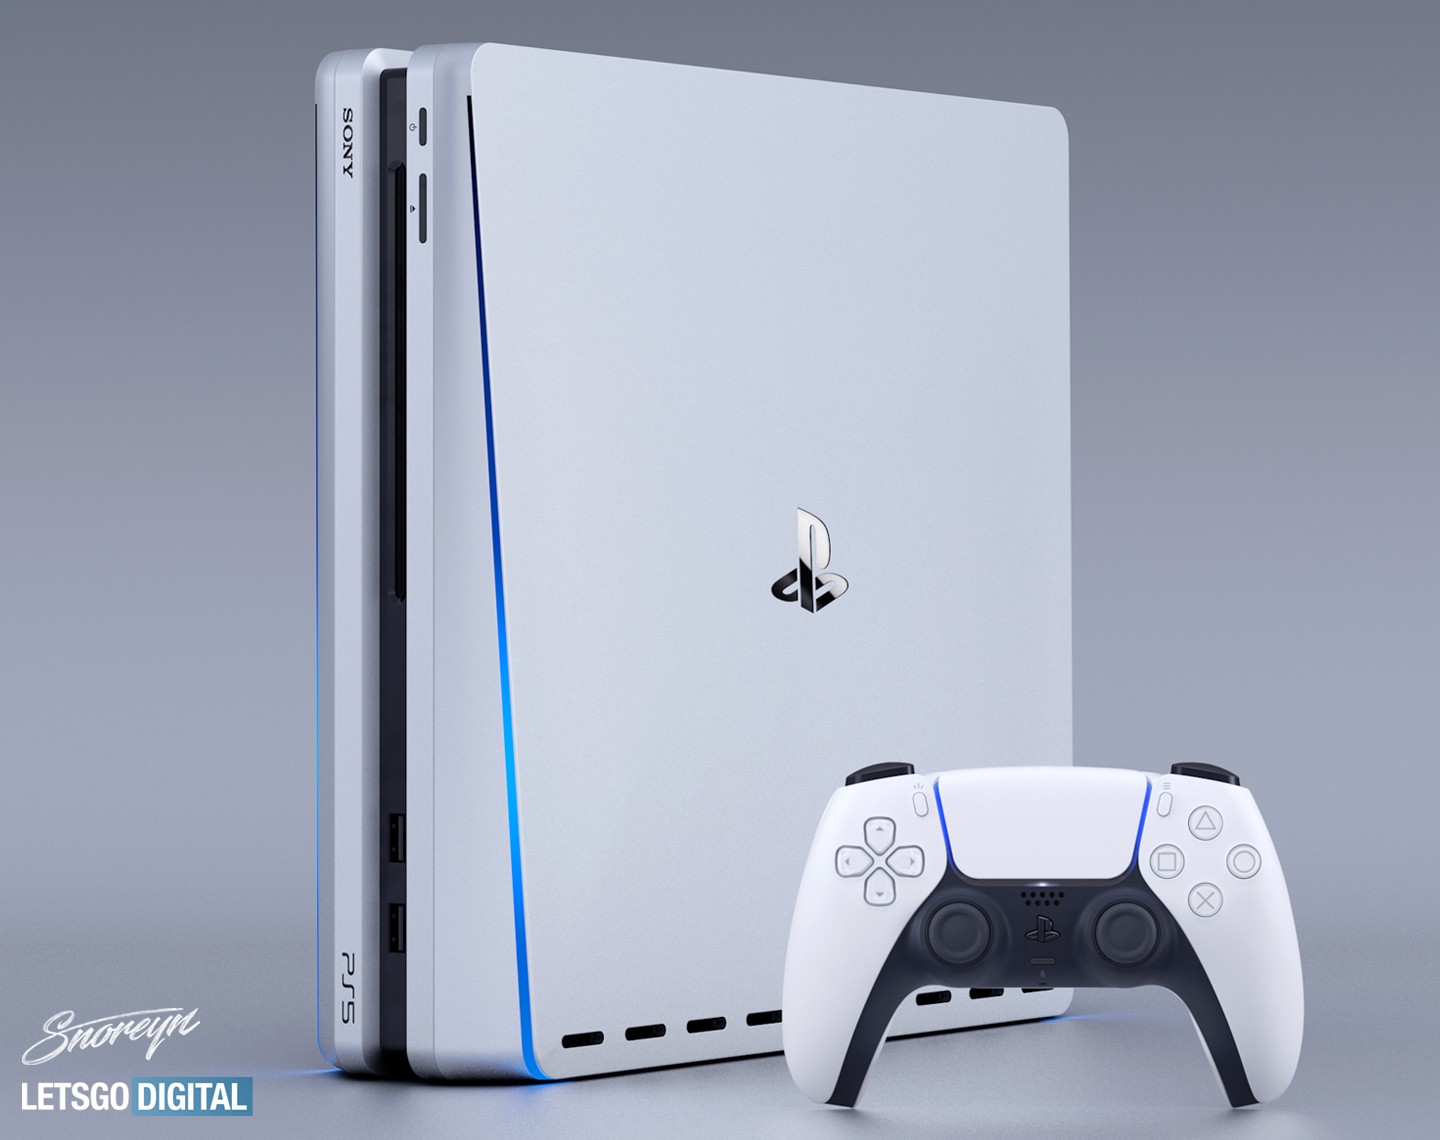 Дизайн PS5 показали после анонса геймпада DualSense